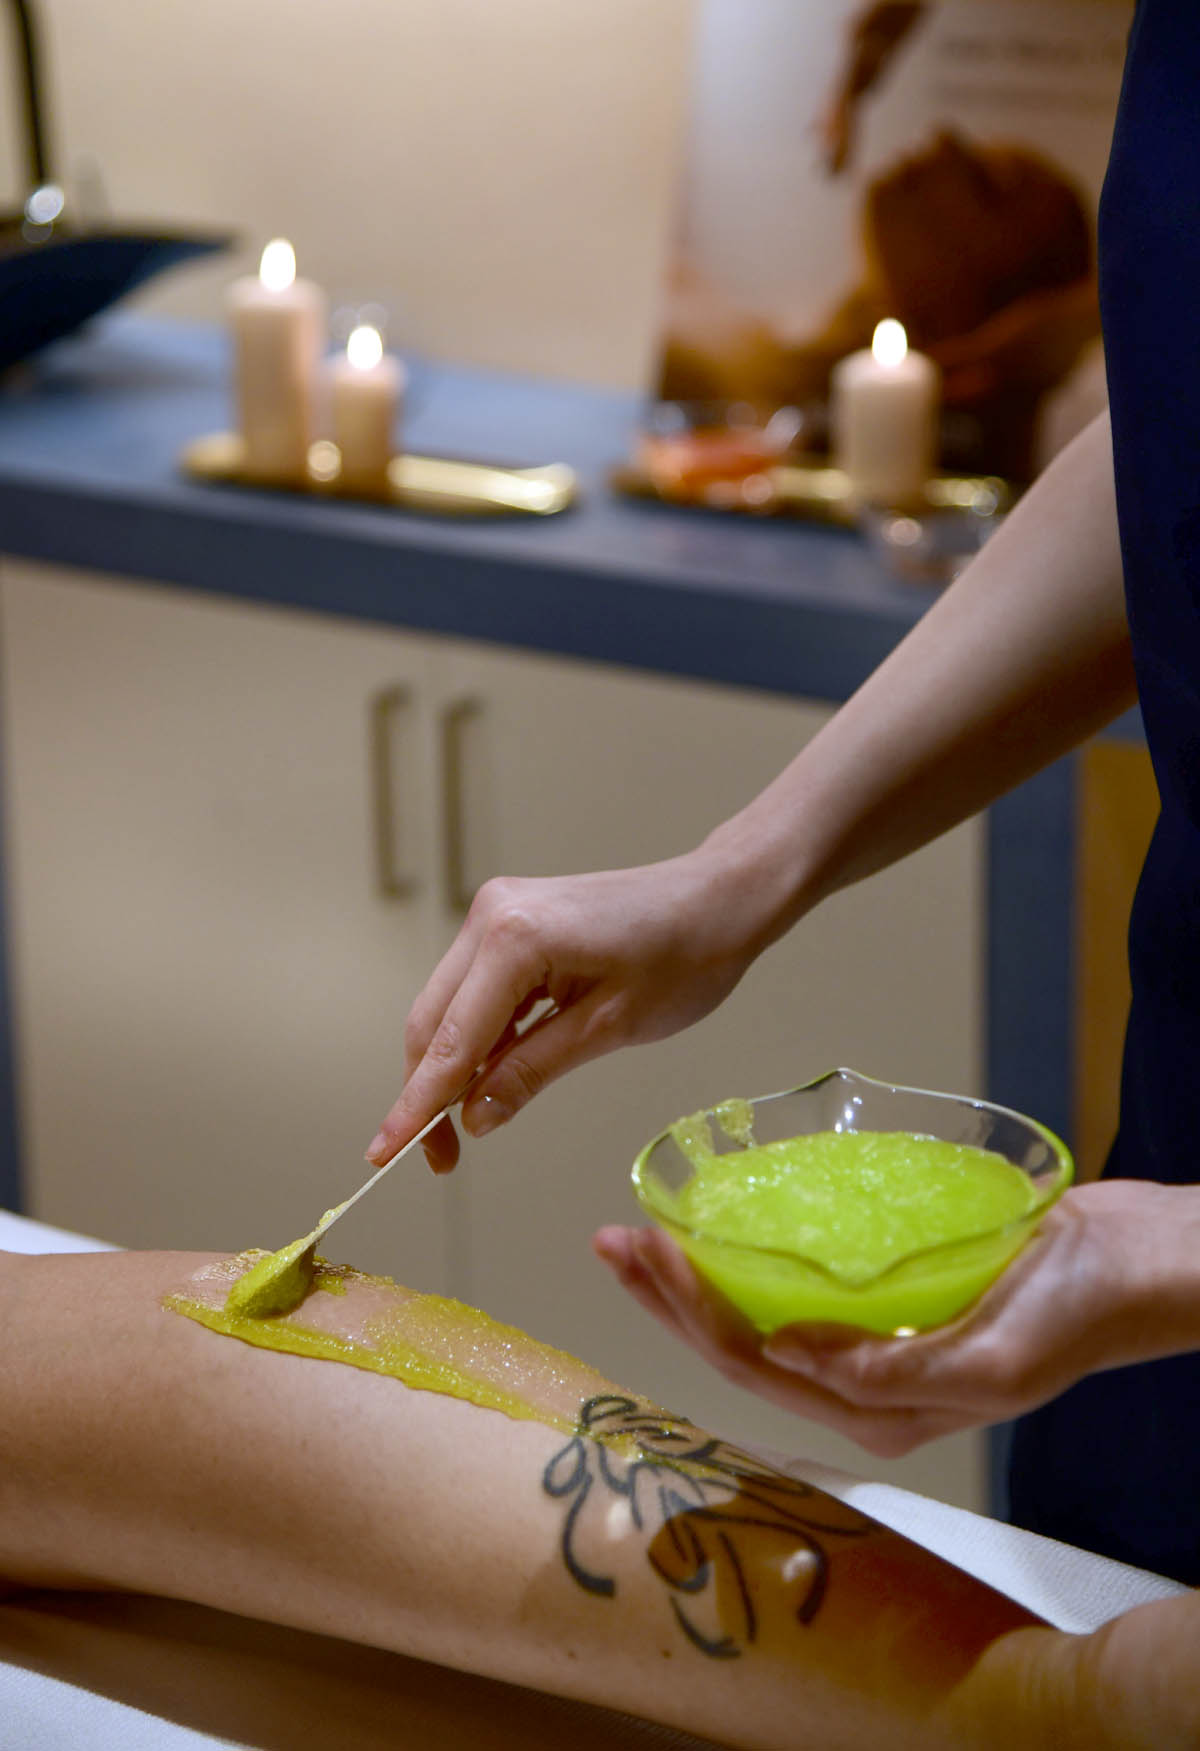 Extravagant health: Proljetne detox masaže u Niniane salonu